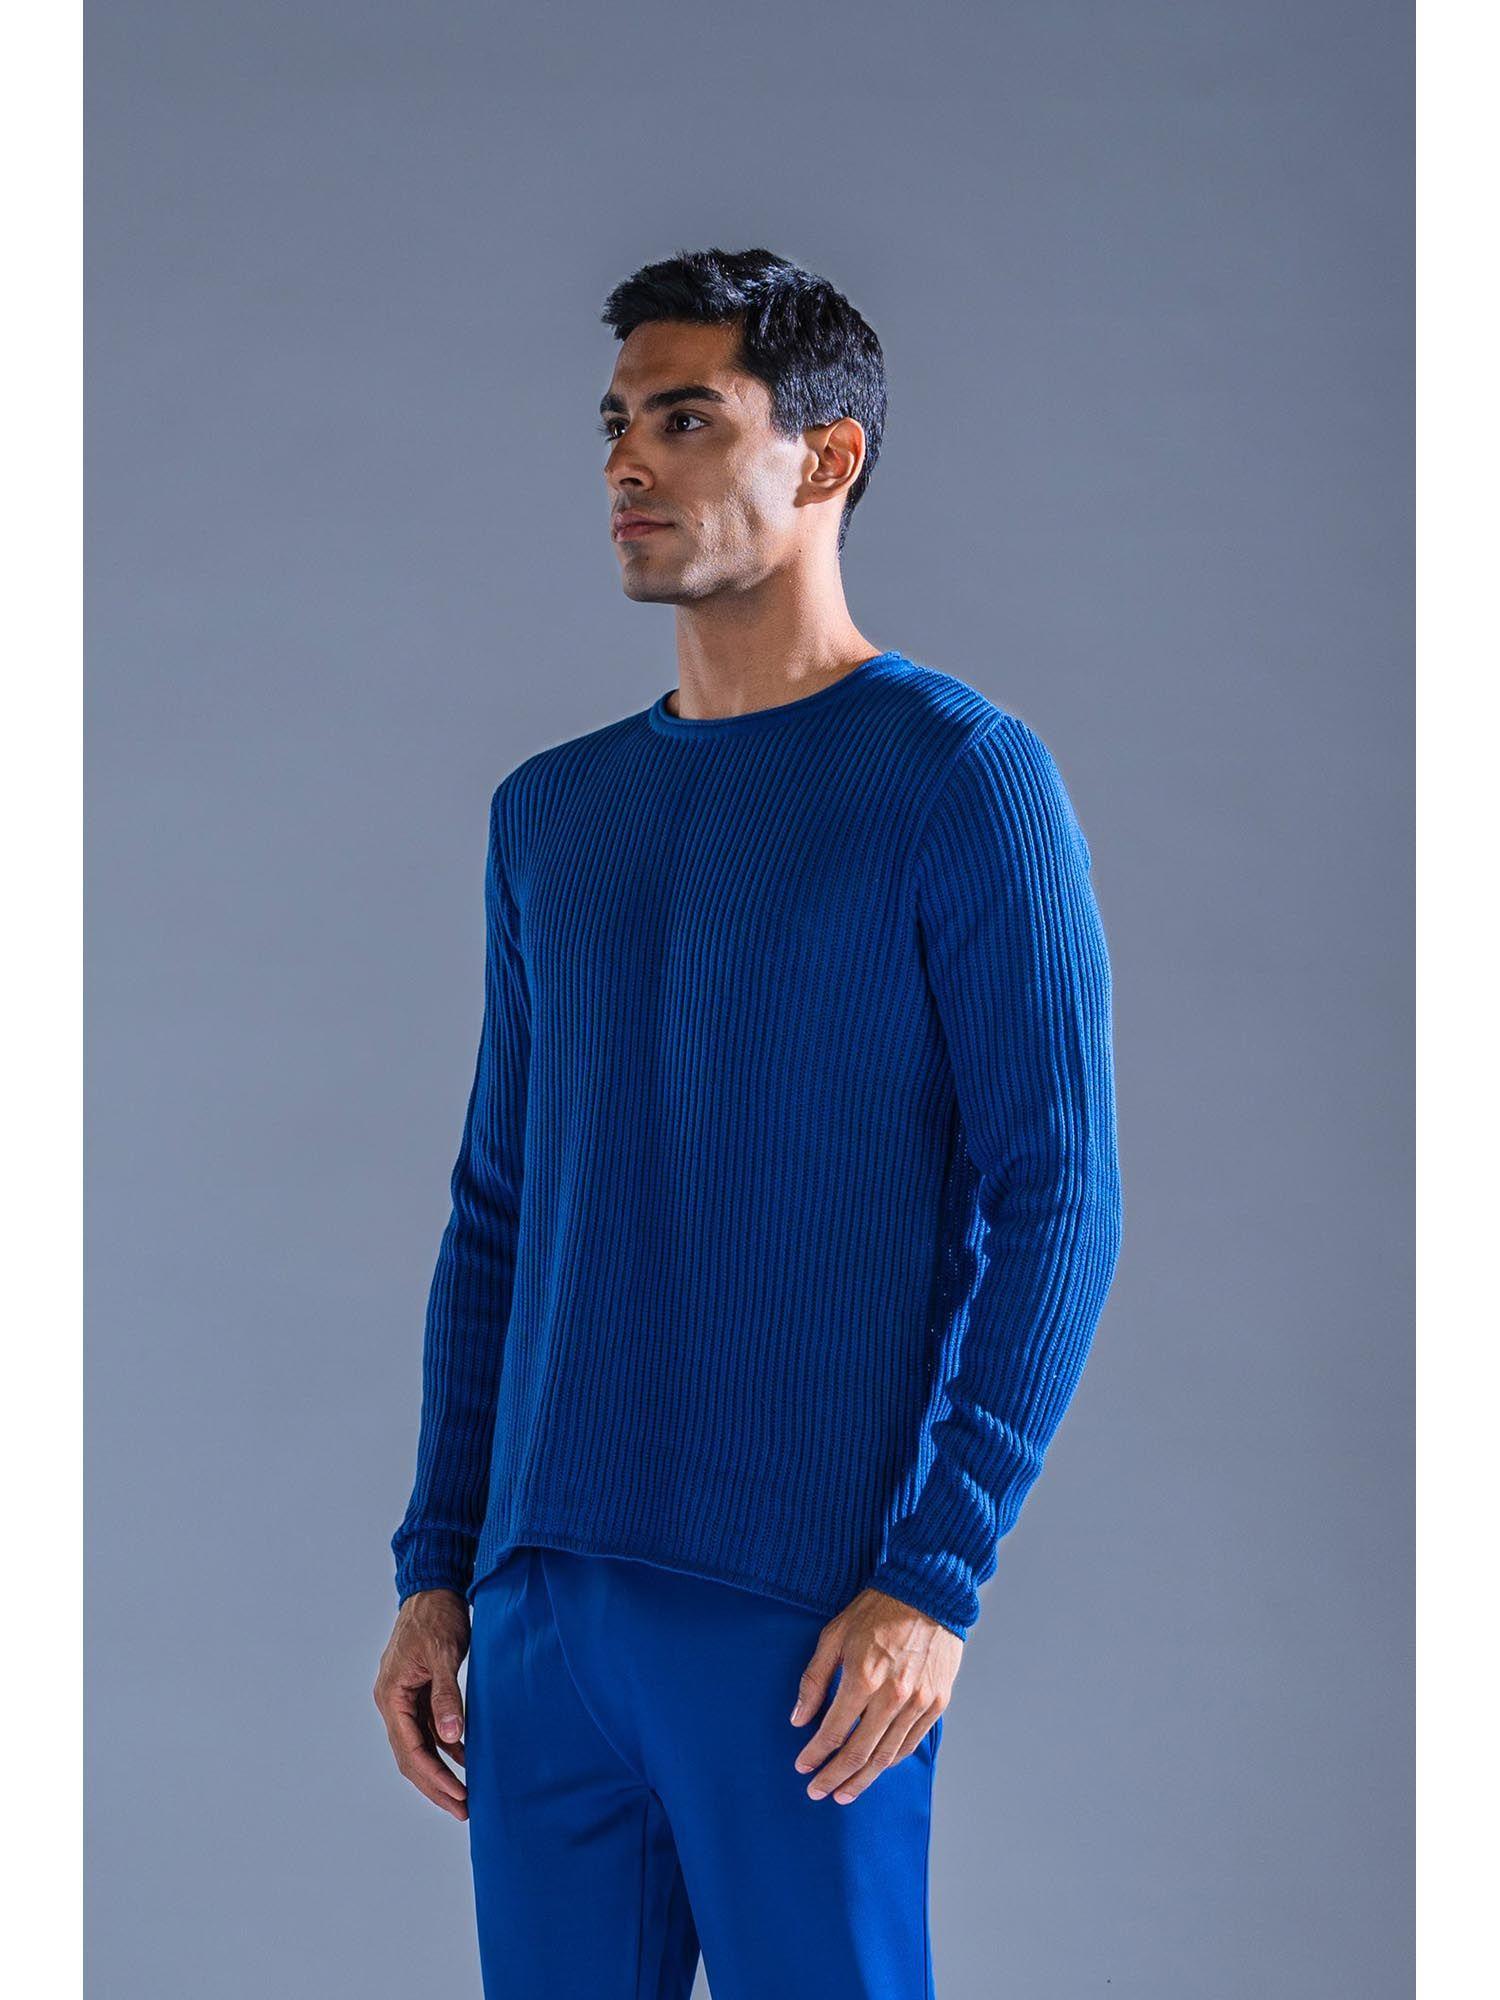 cobalt blue cotton knit sweater mesh knit-sweater